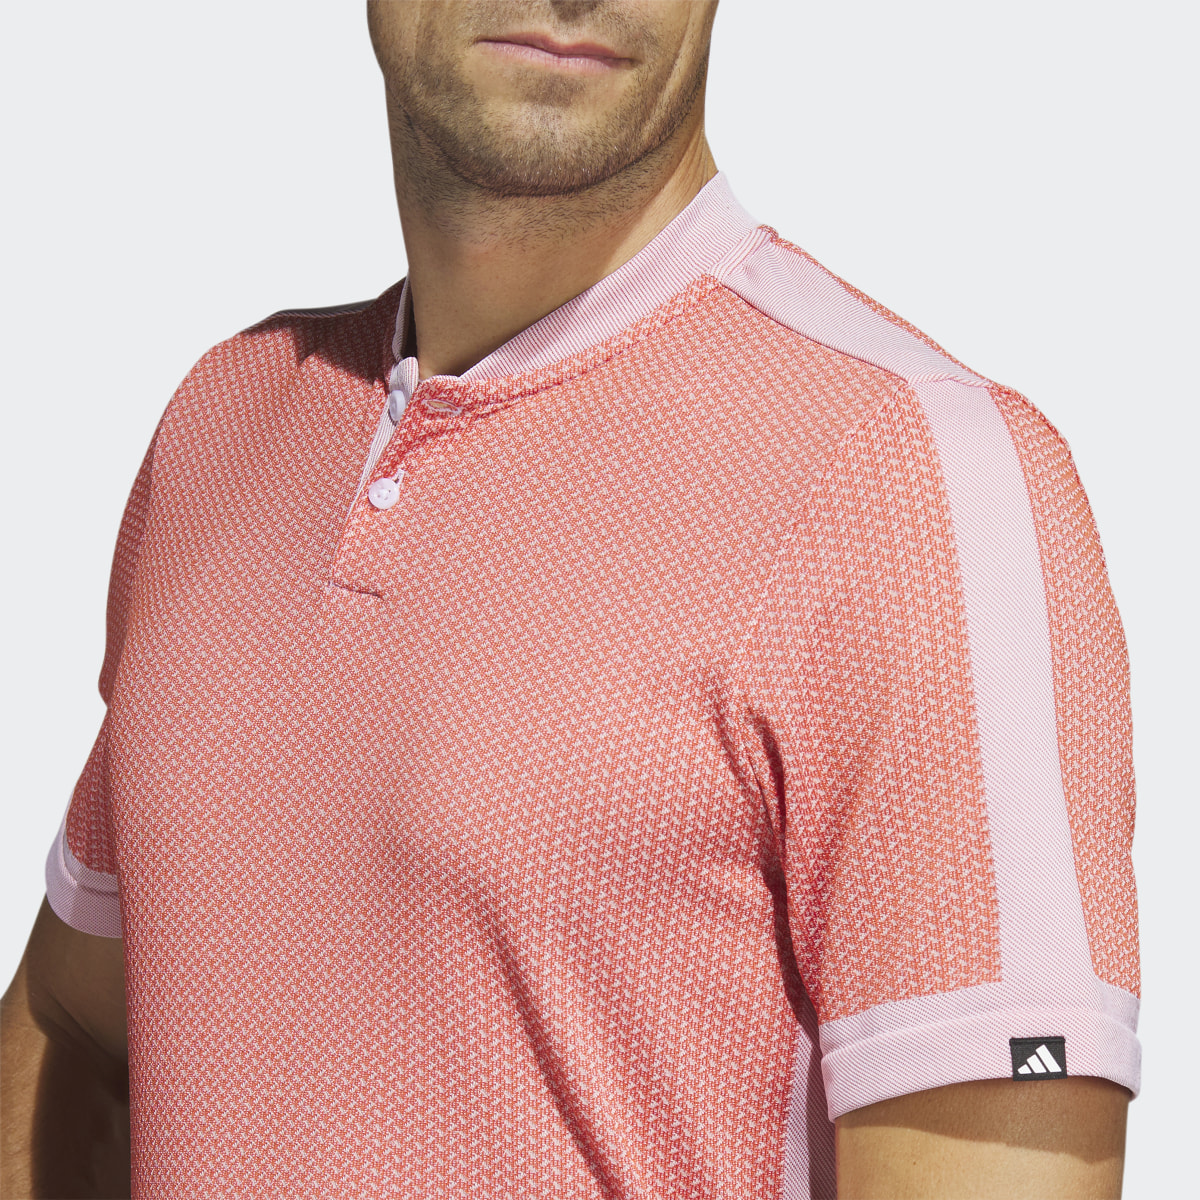 Adidas Ultimate365 Tour Textured PRIMEKNIT Golf Polo Shirt. 6